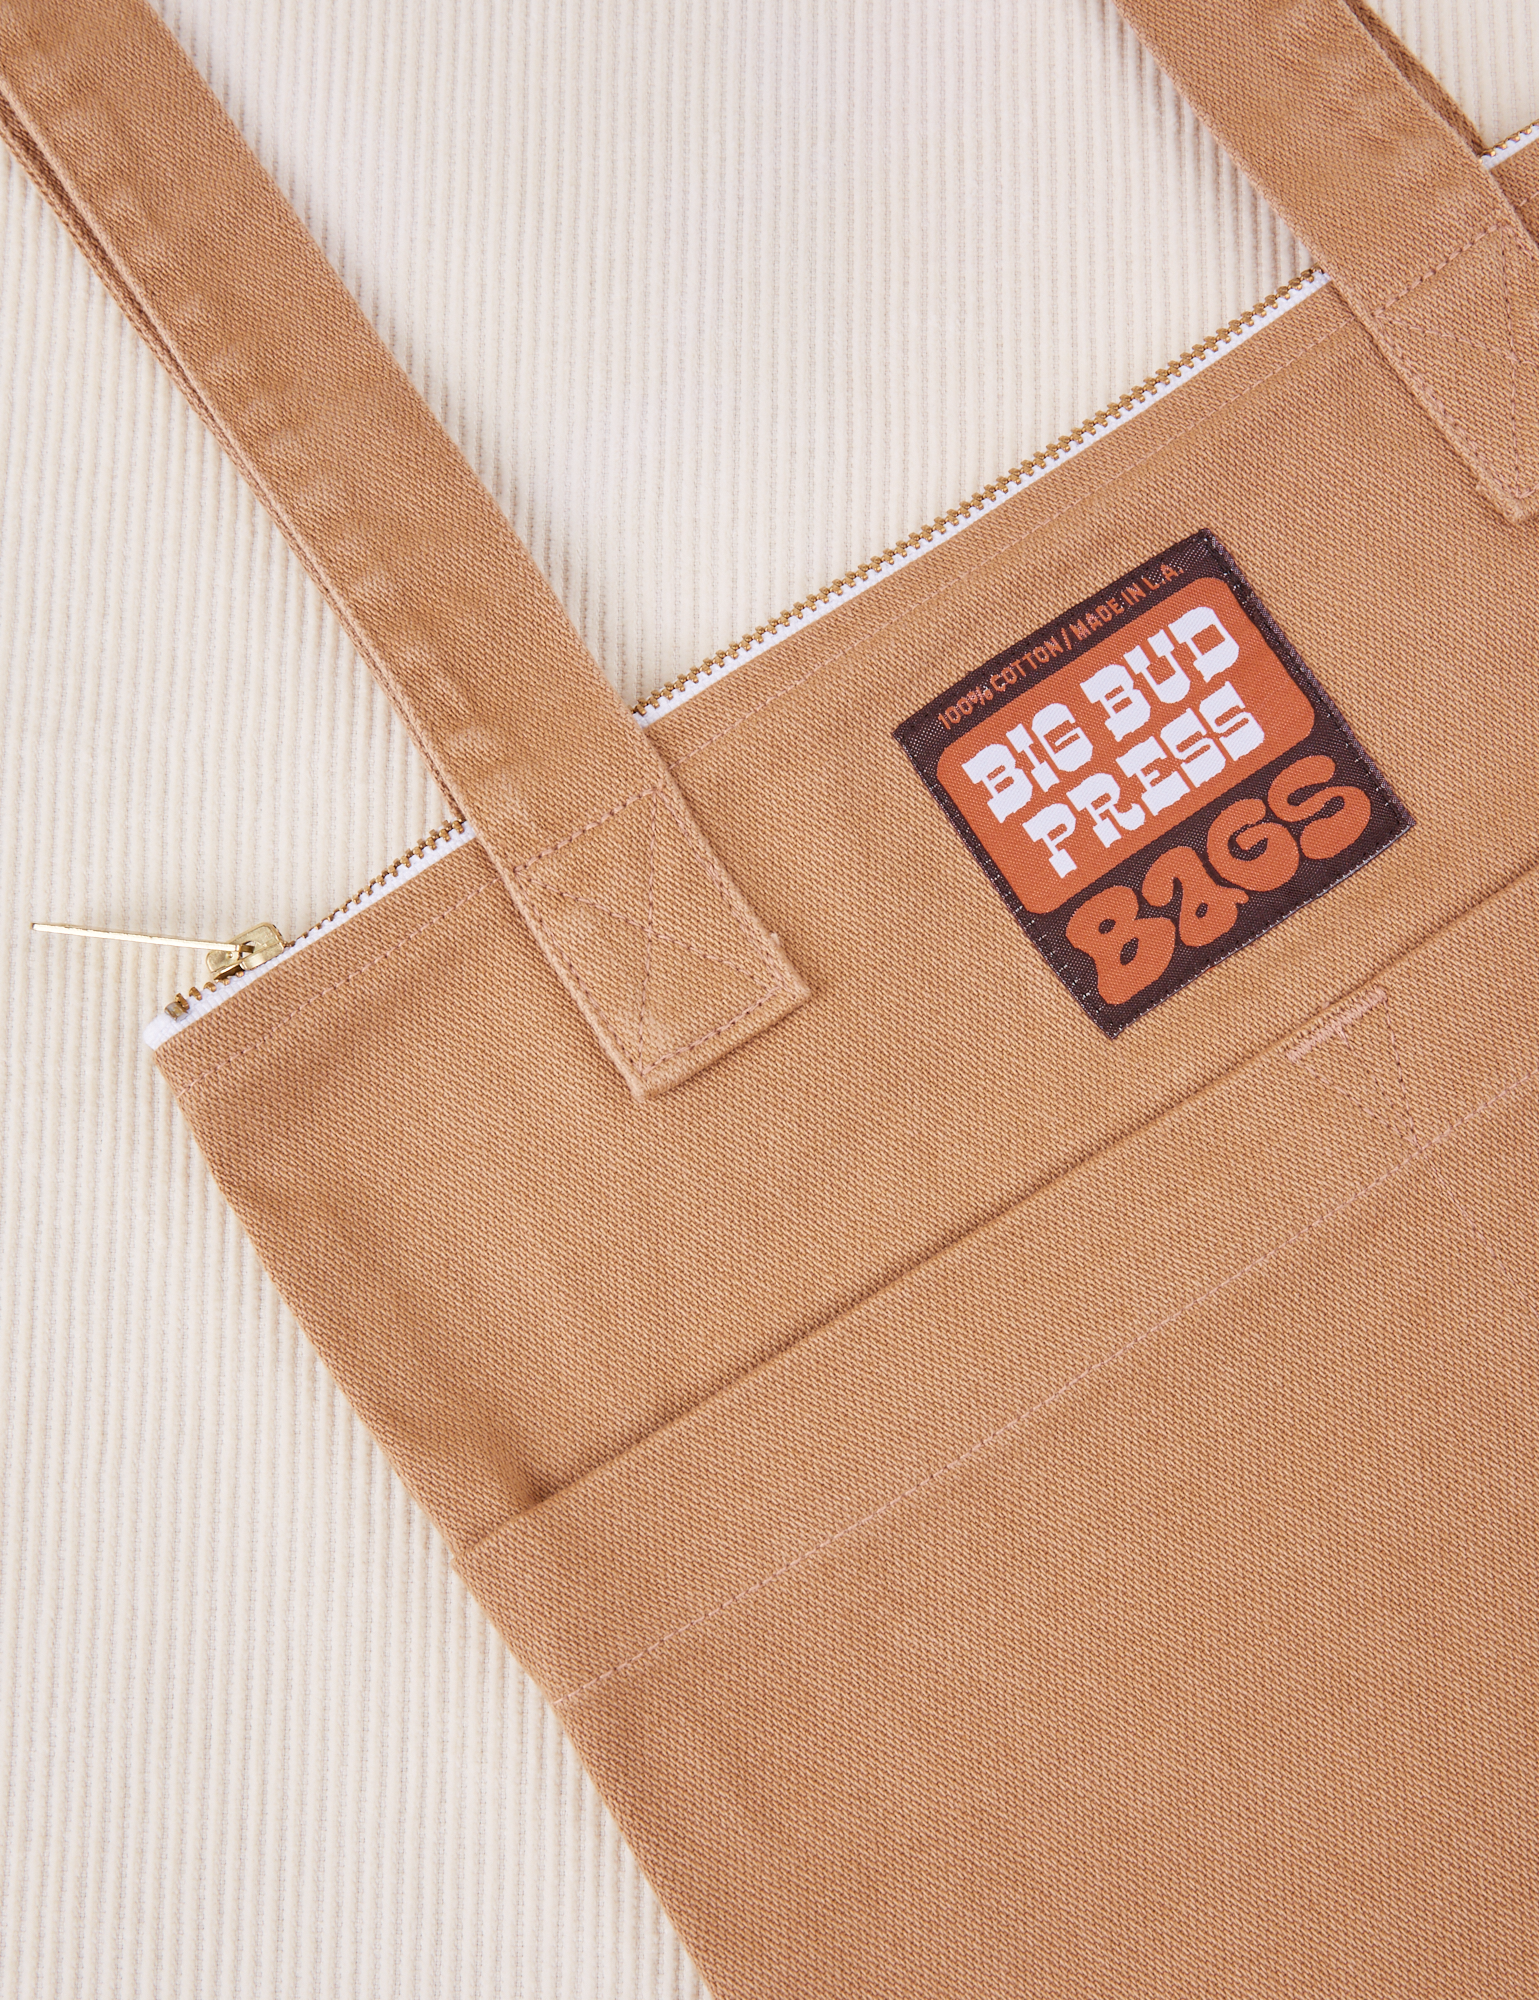 Over-Shoulder Zip Mini Tote in Tan close up with brown and orange Big Bud Press label